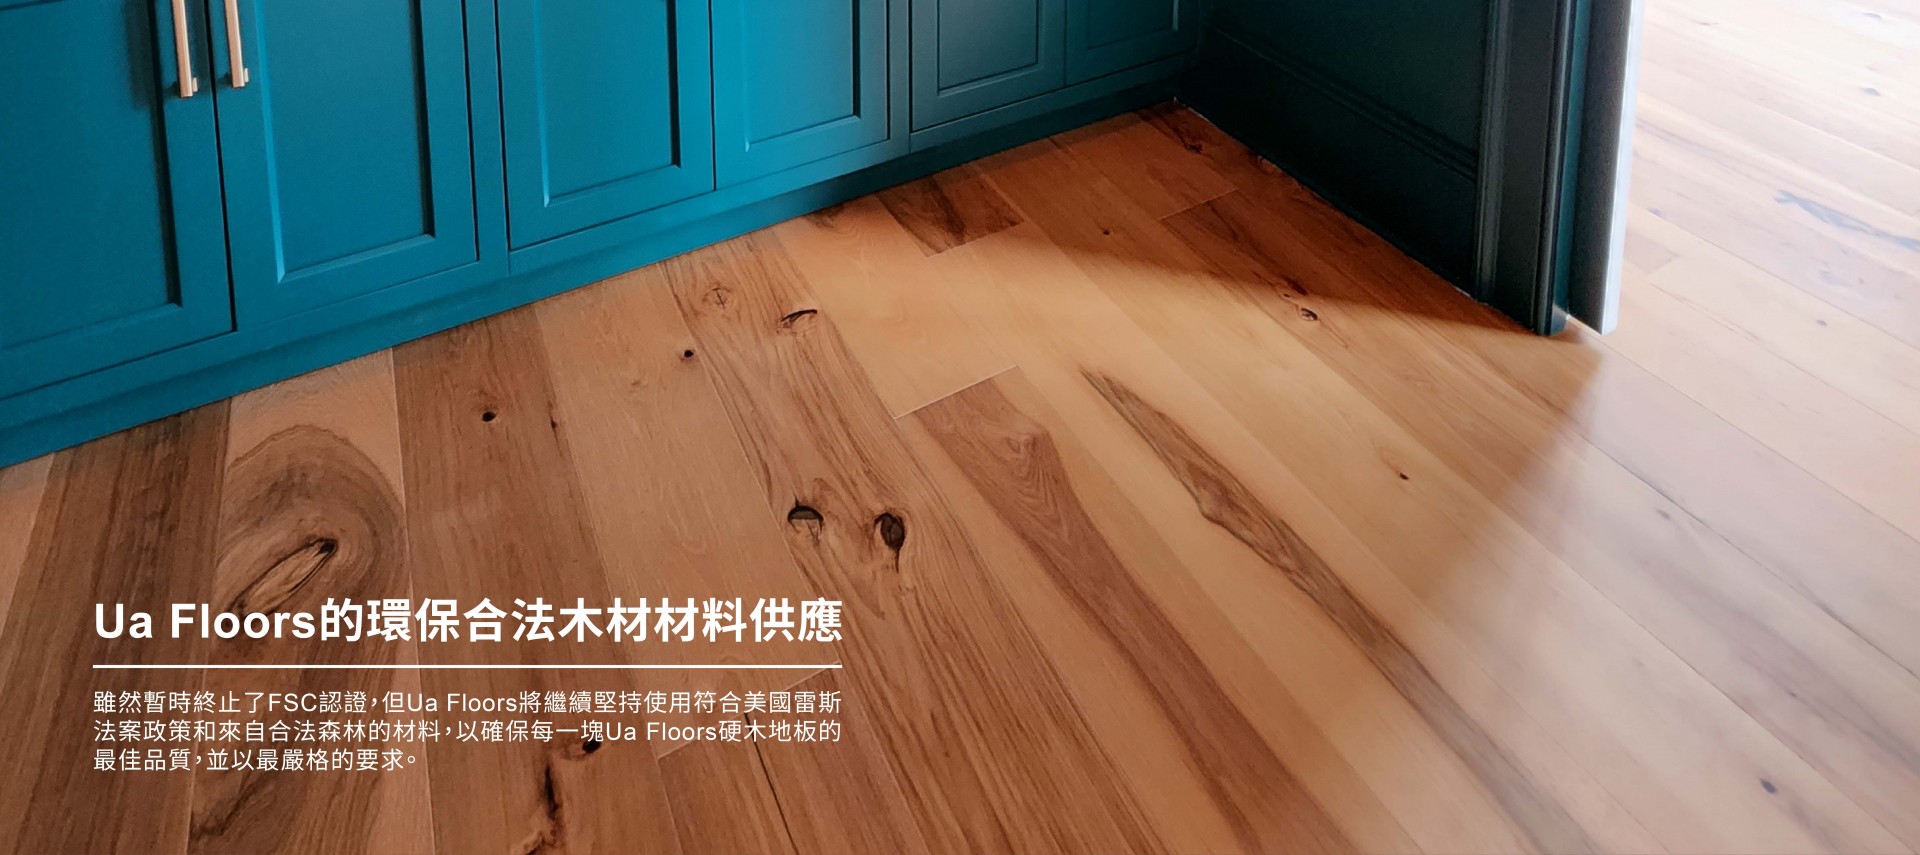 Ua Floors - Ua Floors 健康能量木地板-綠建材首選&全台10家門市